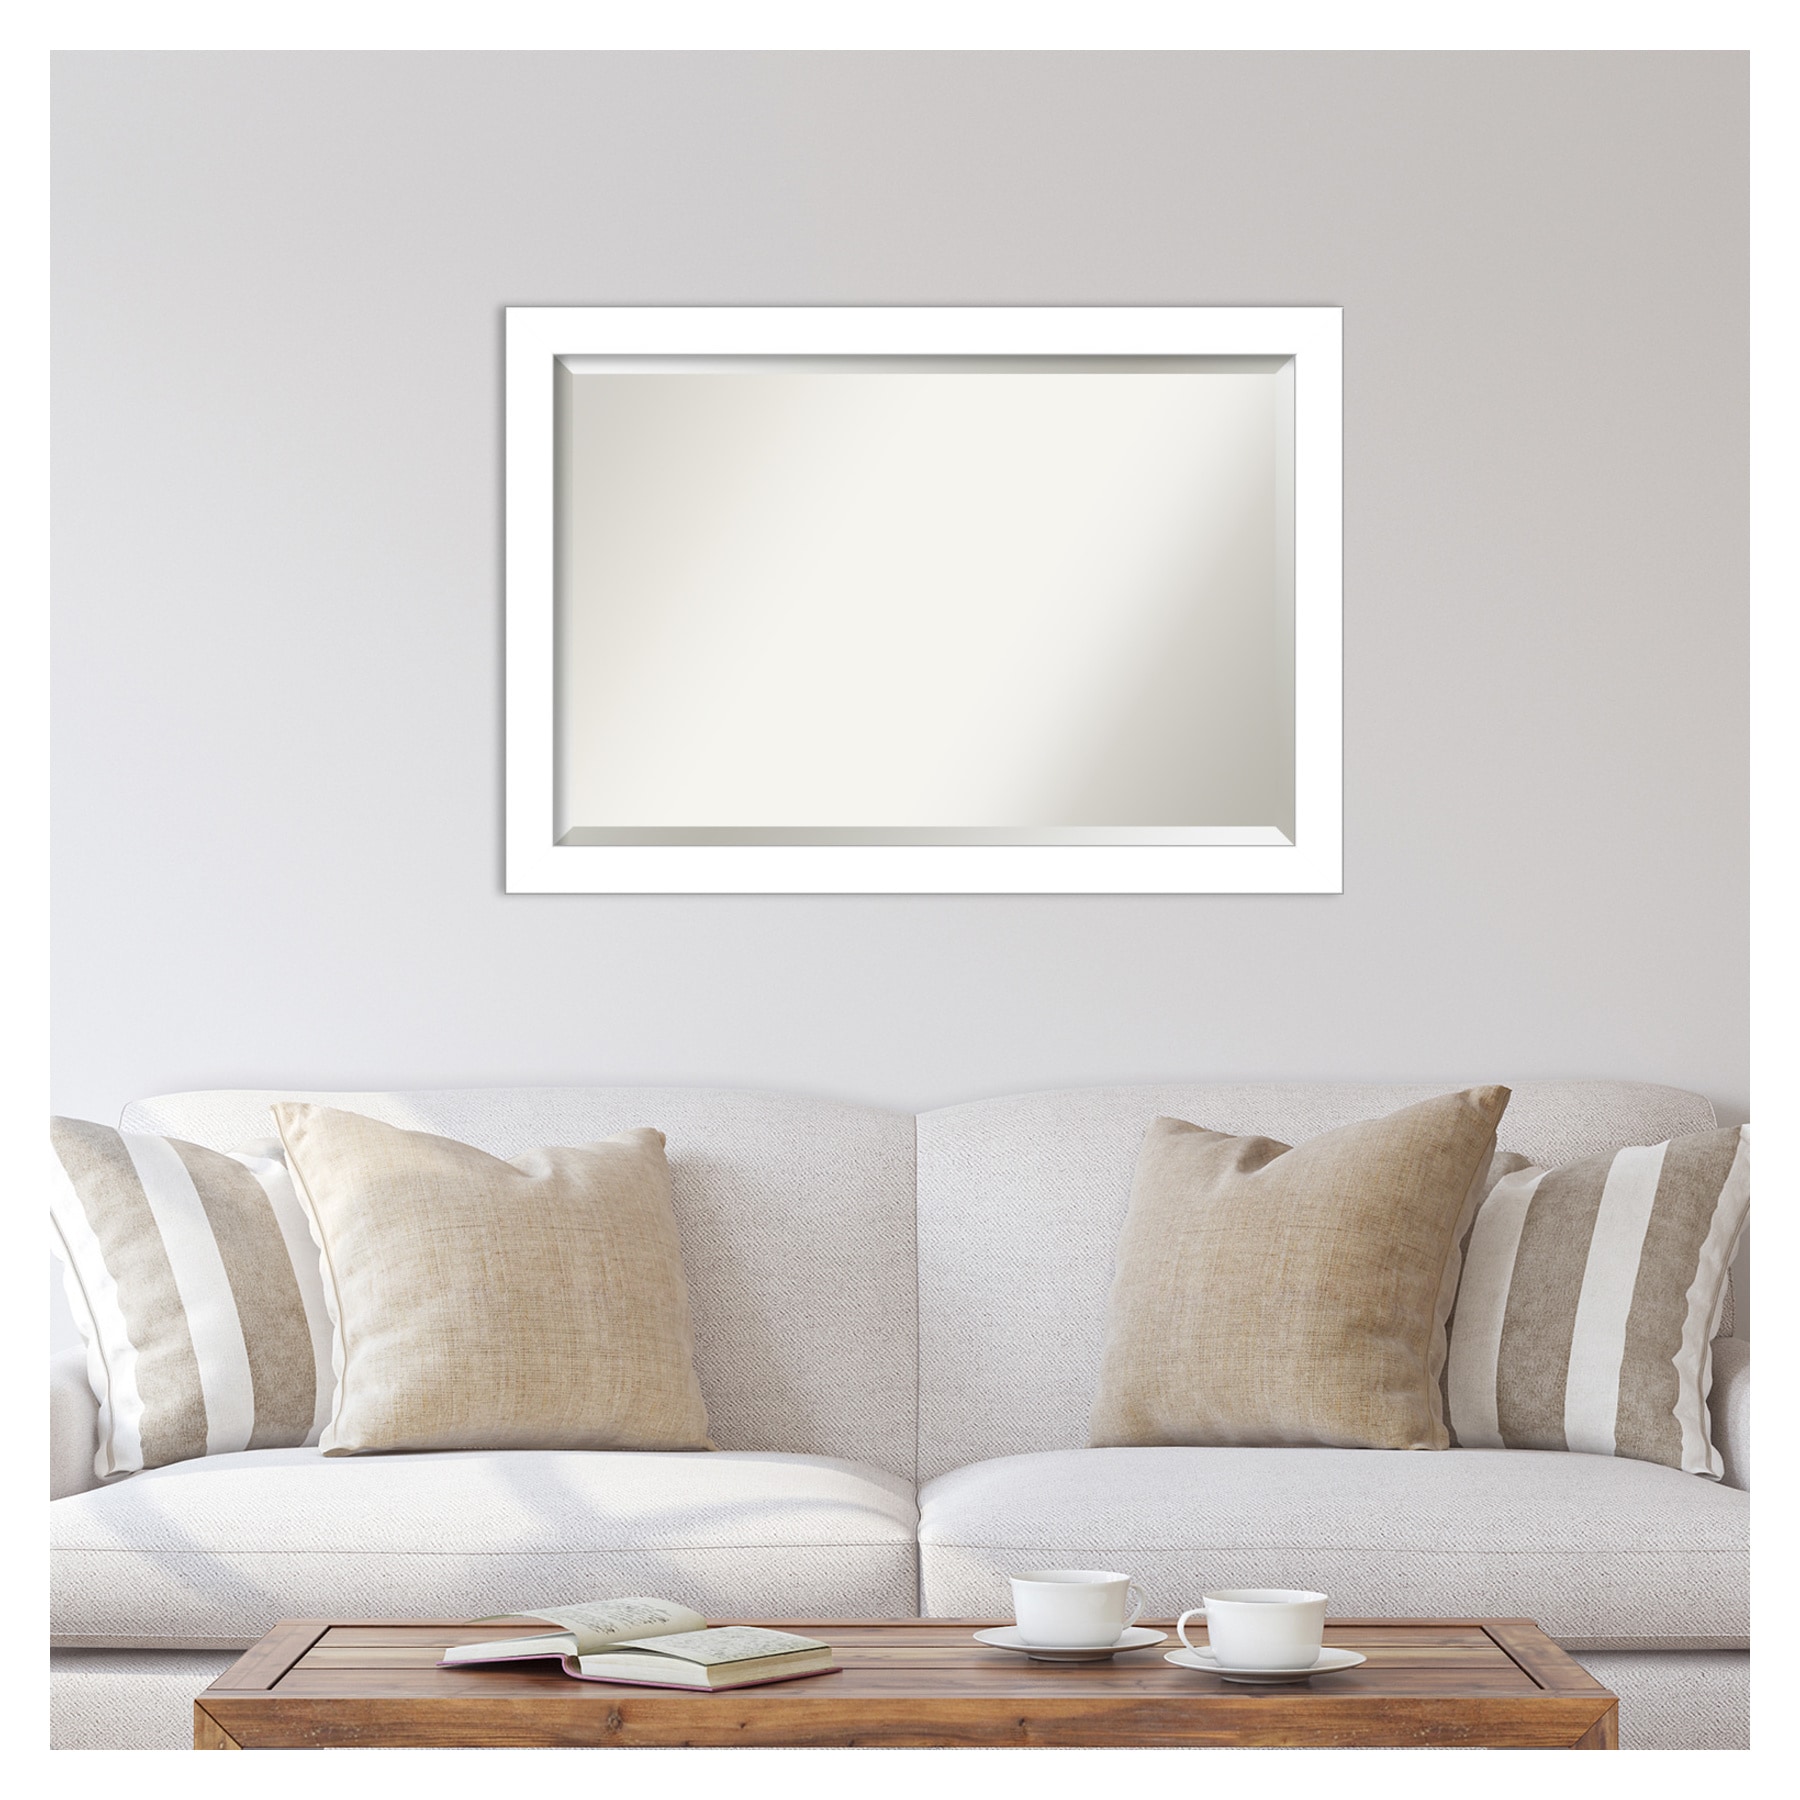 Amanti Art Wedge White Frame 40.25-in x 28.25-in Framed Bathroom Vanity ...